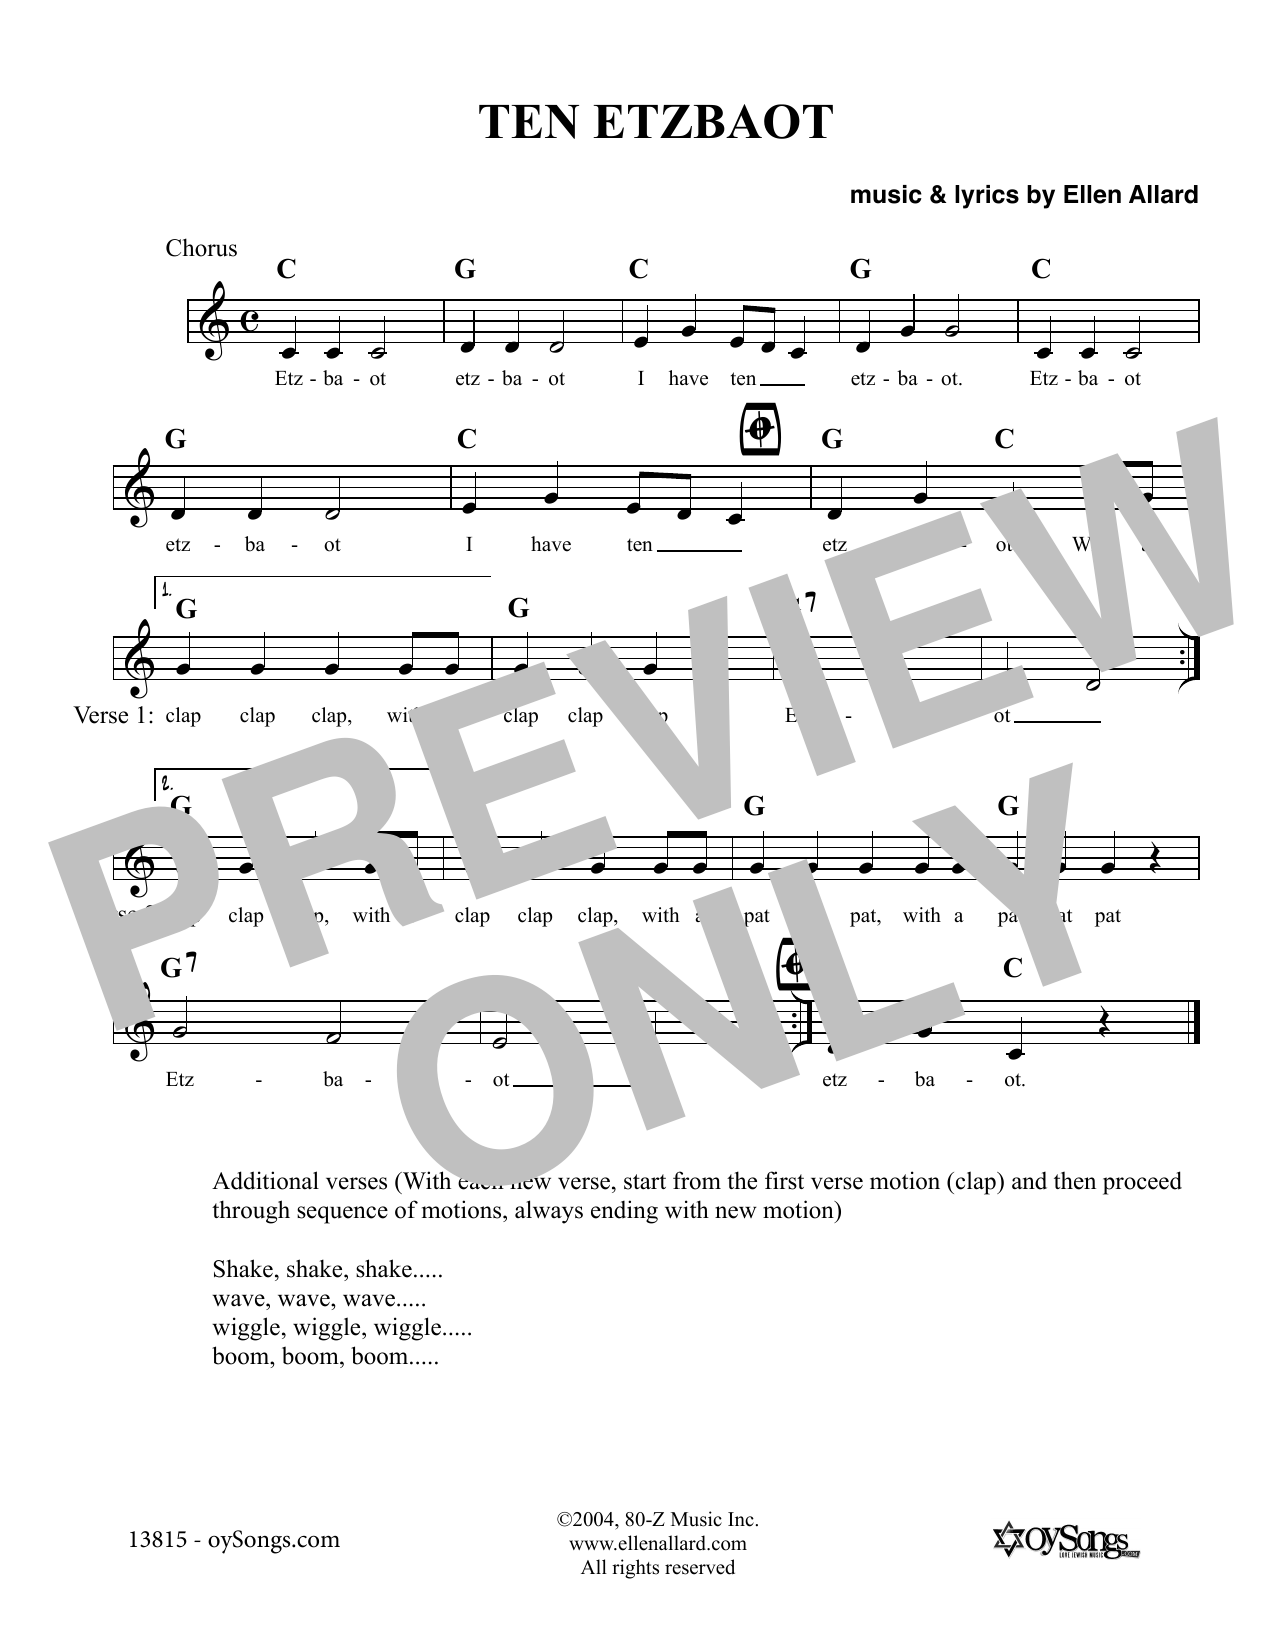 Download Ellen Allard Ten Etzbaot Sheet Music and learn how to play Melody Line, Lyrics & Chords PDF digital score in minutes